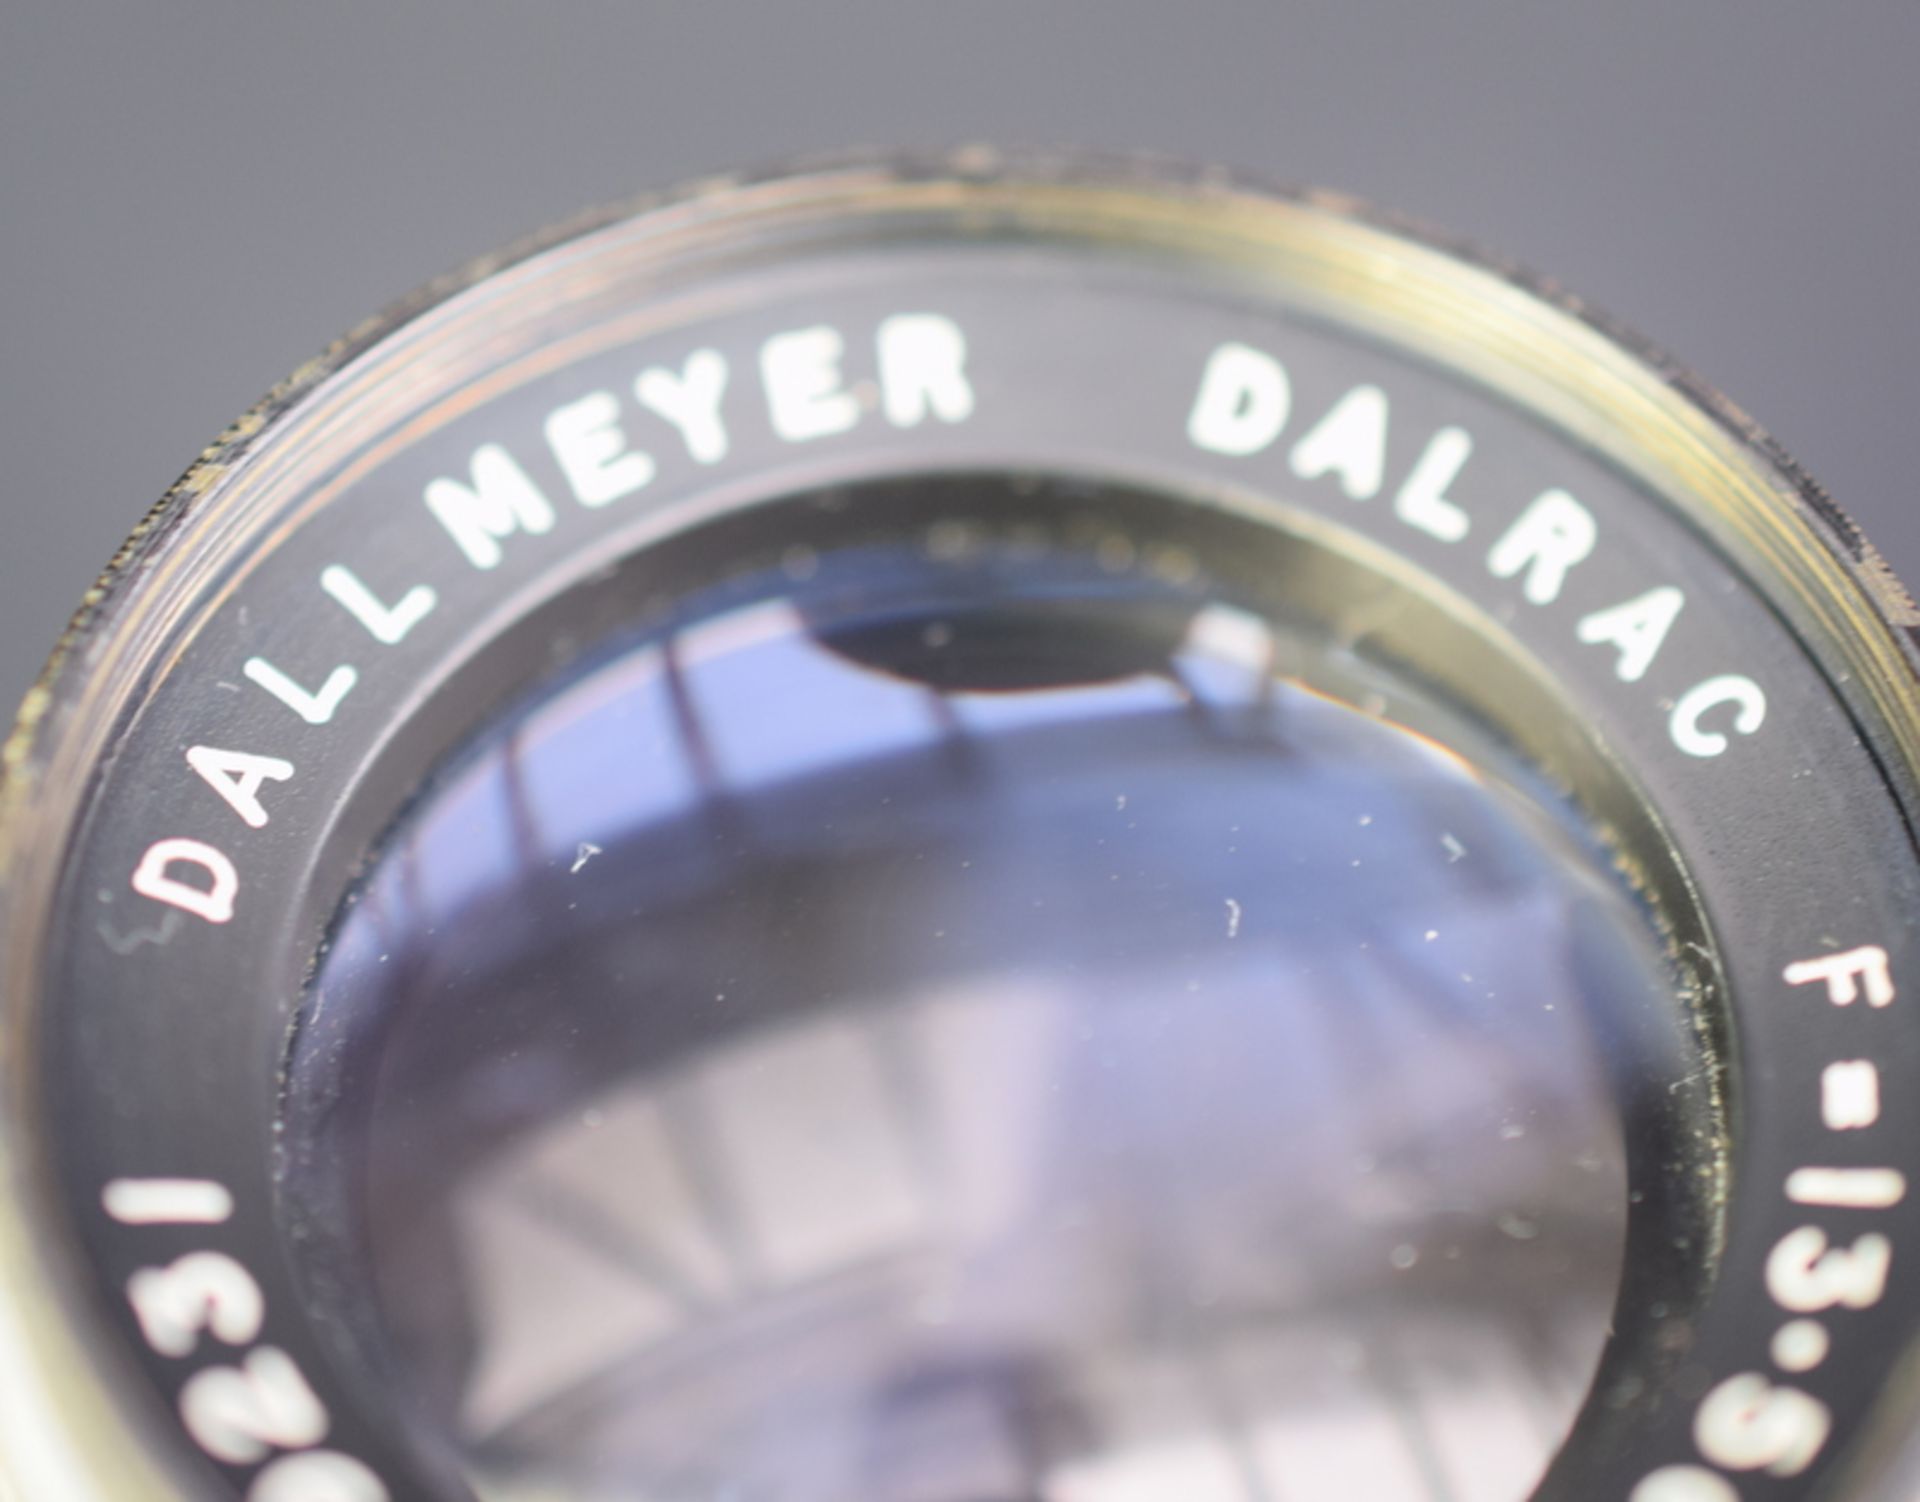 Dallmeyer Dalrac F = 13,5cm f/4.5 Lens for Leica M42 Screw Mount - Image 6 of 6